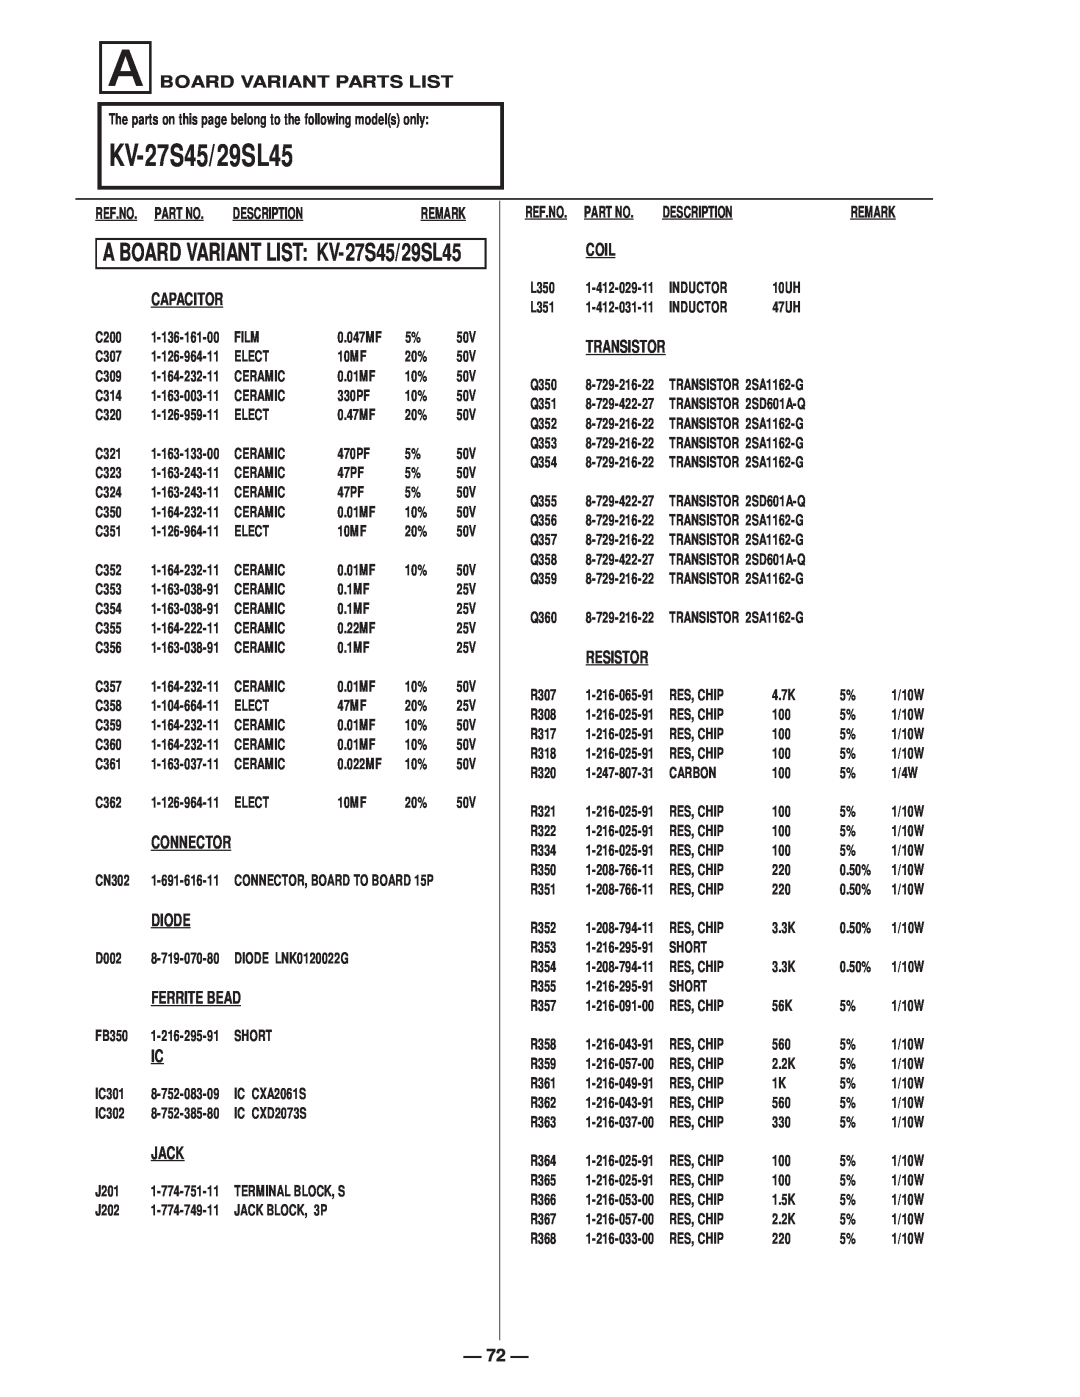 Sony KV-29SL40C, KV-29SL65C A BOARD VARIANT LIST KV-27S45/29SL45, A Board Variant Parts List, Description, Remark 